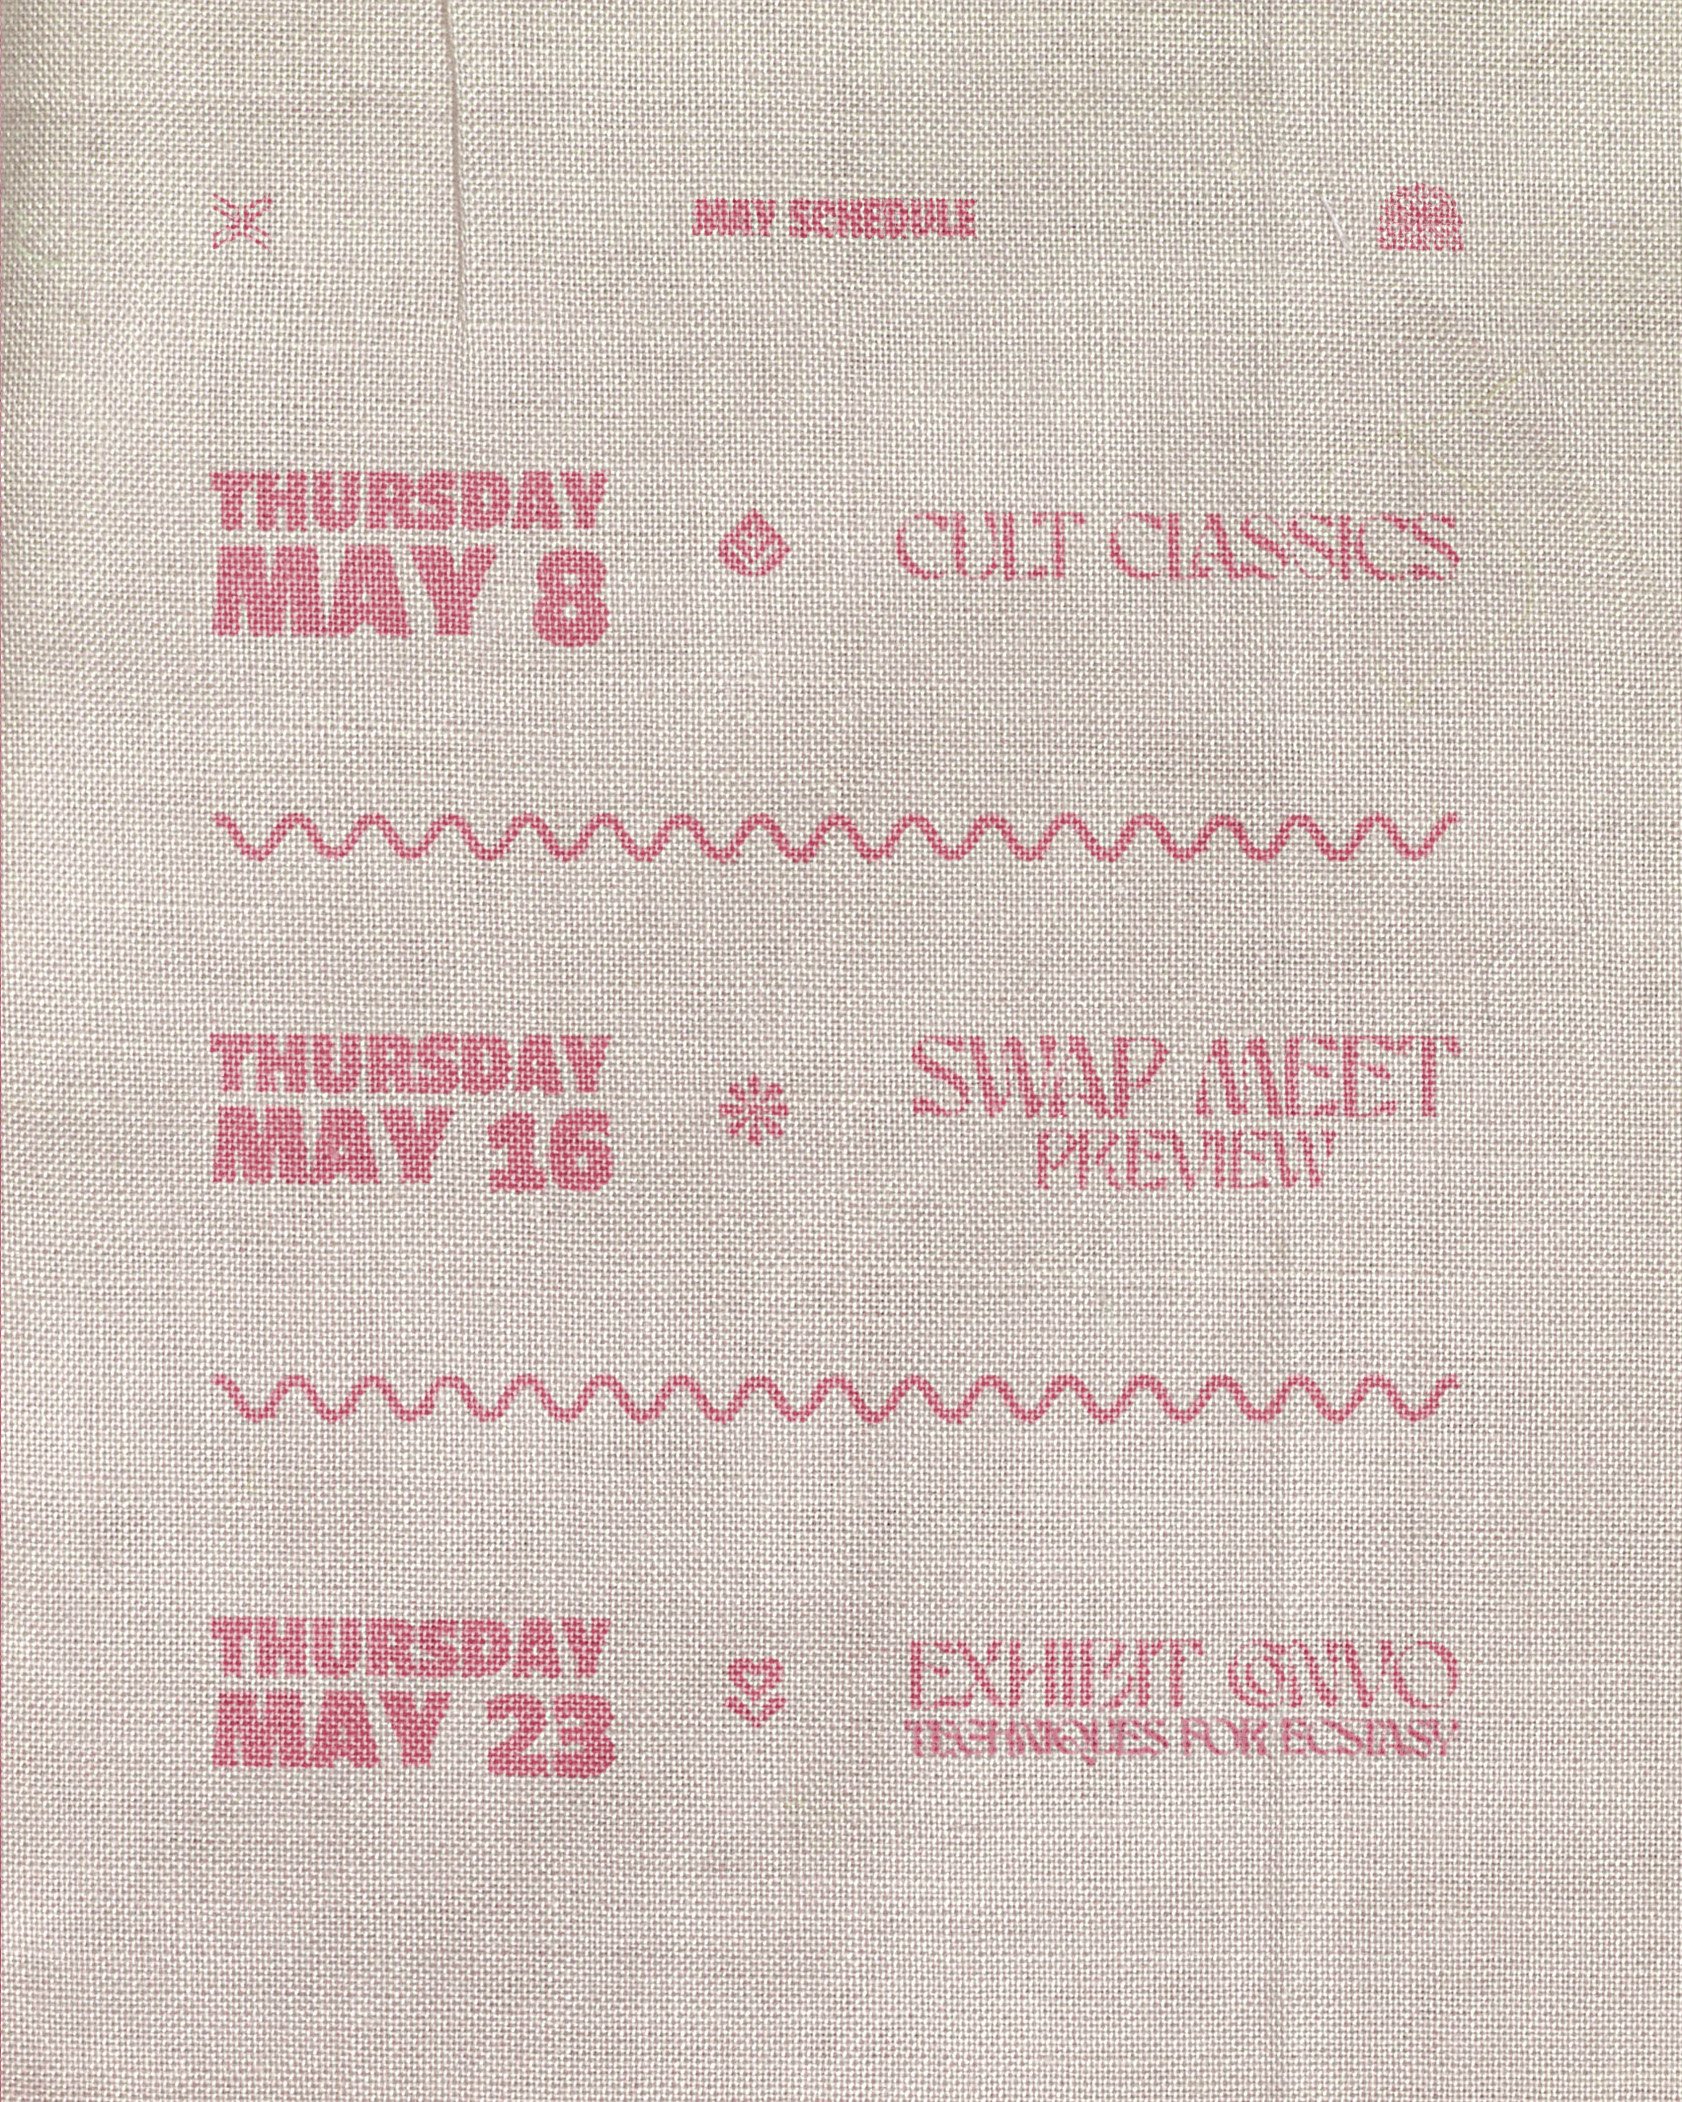 2.May Lounge Thursdays - Schedule.jpg